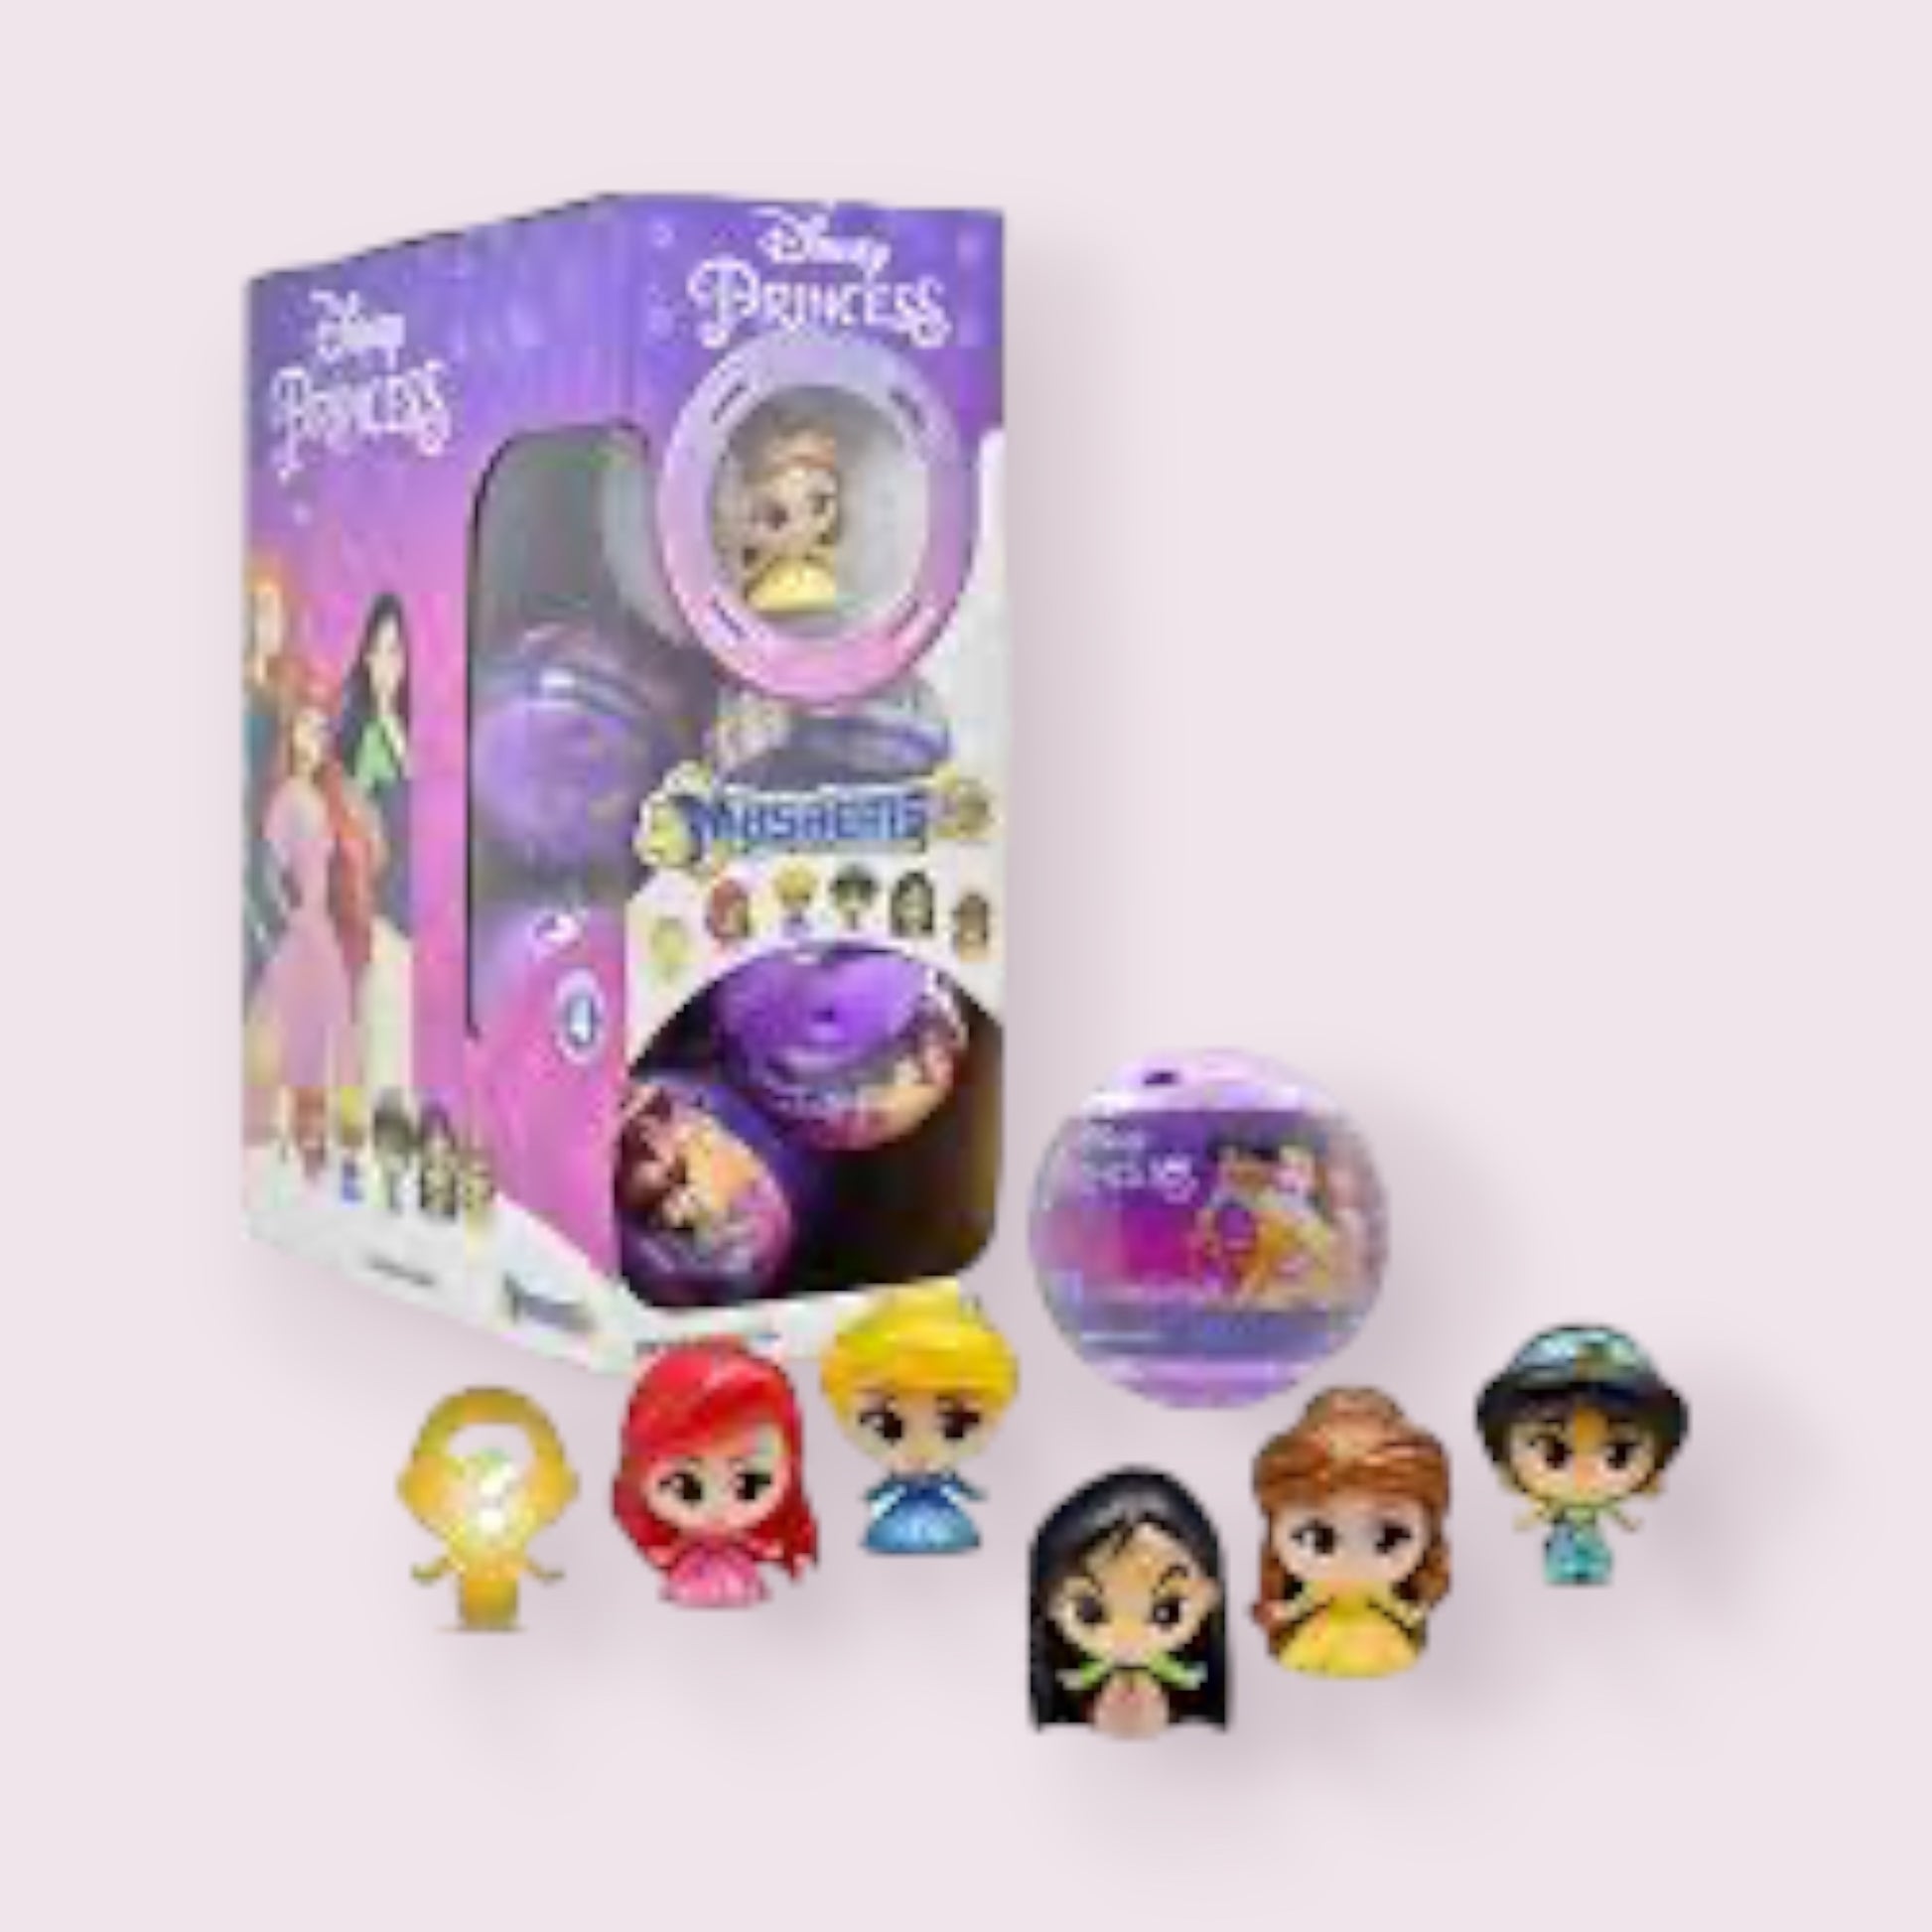 Mash'ems Disney Princesses Toy  Pixie Candy Shoppe   